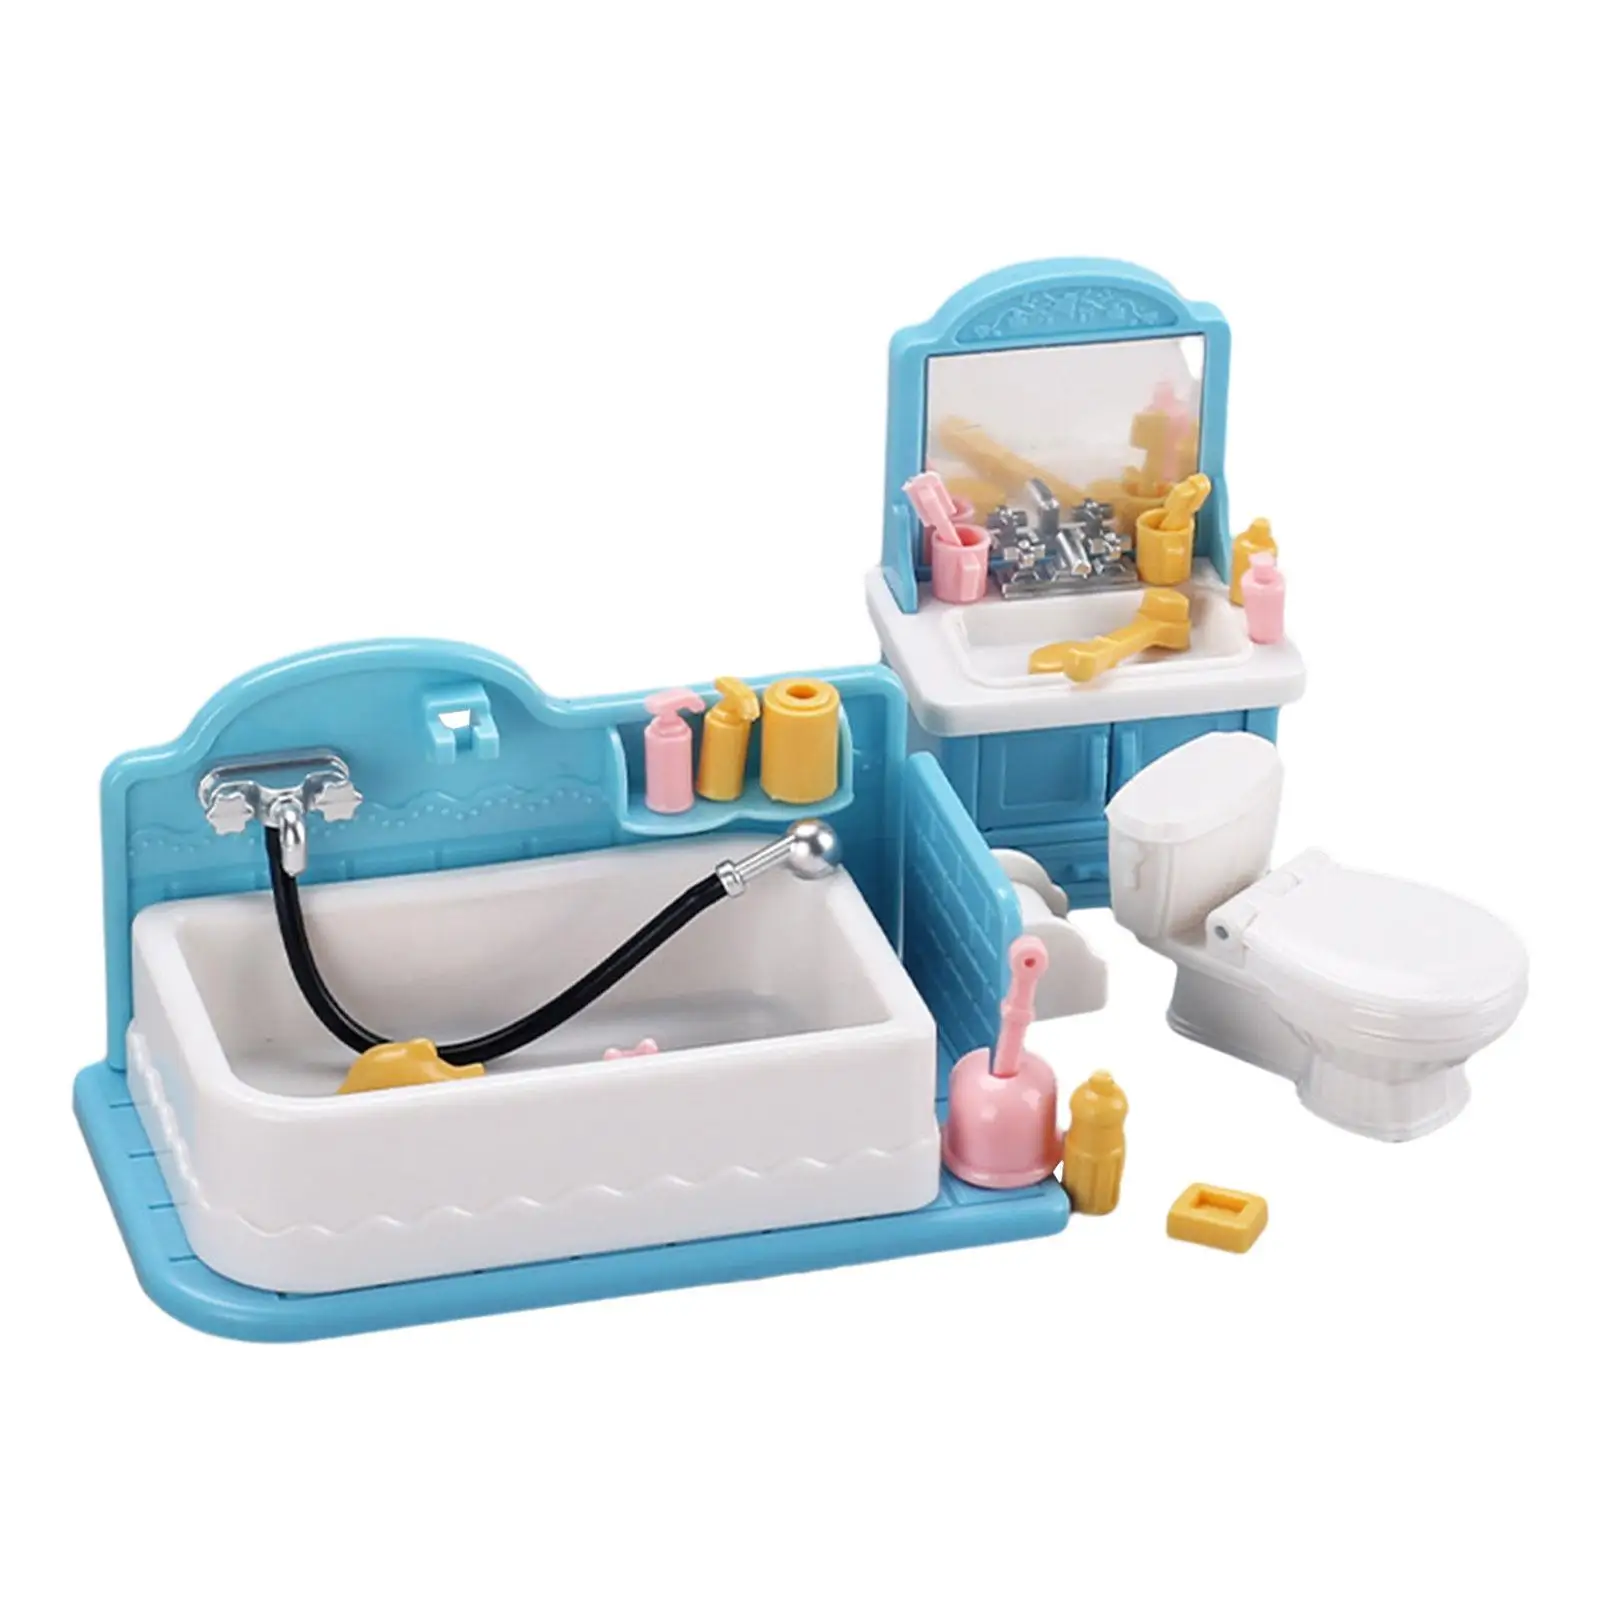 

1:12 Scale Dollhouse Bathroom Set Ornament Classic Pretend Play Toy Micro Landscape Simulation Include Mini Toilet Sink Bathtub